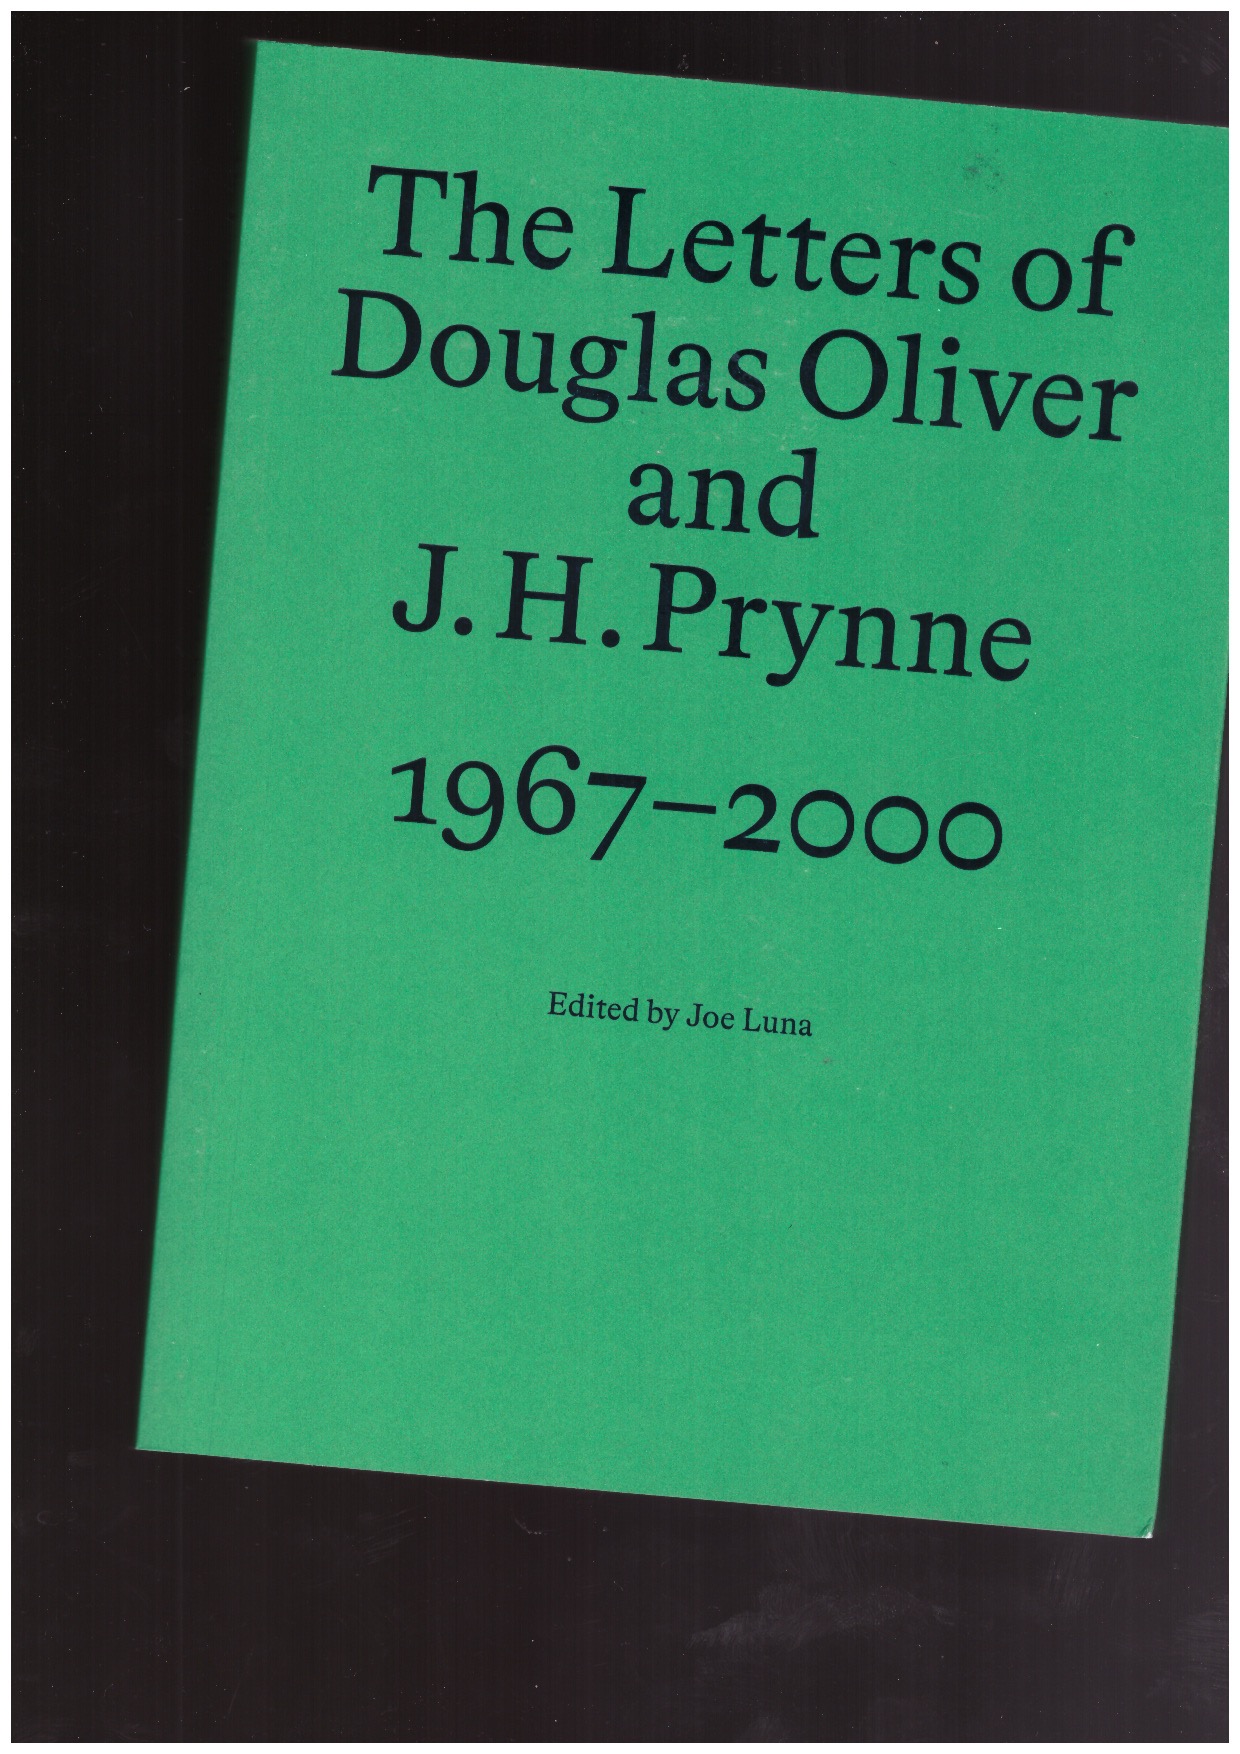 LUNA, Joe (ed.) - The letters of Douglas Oliver and J.H. Pryne 1967-2000